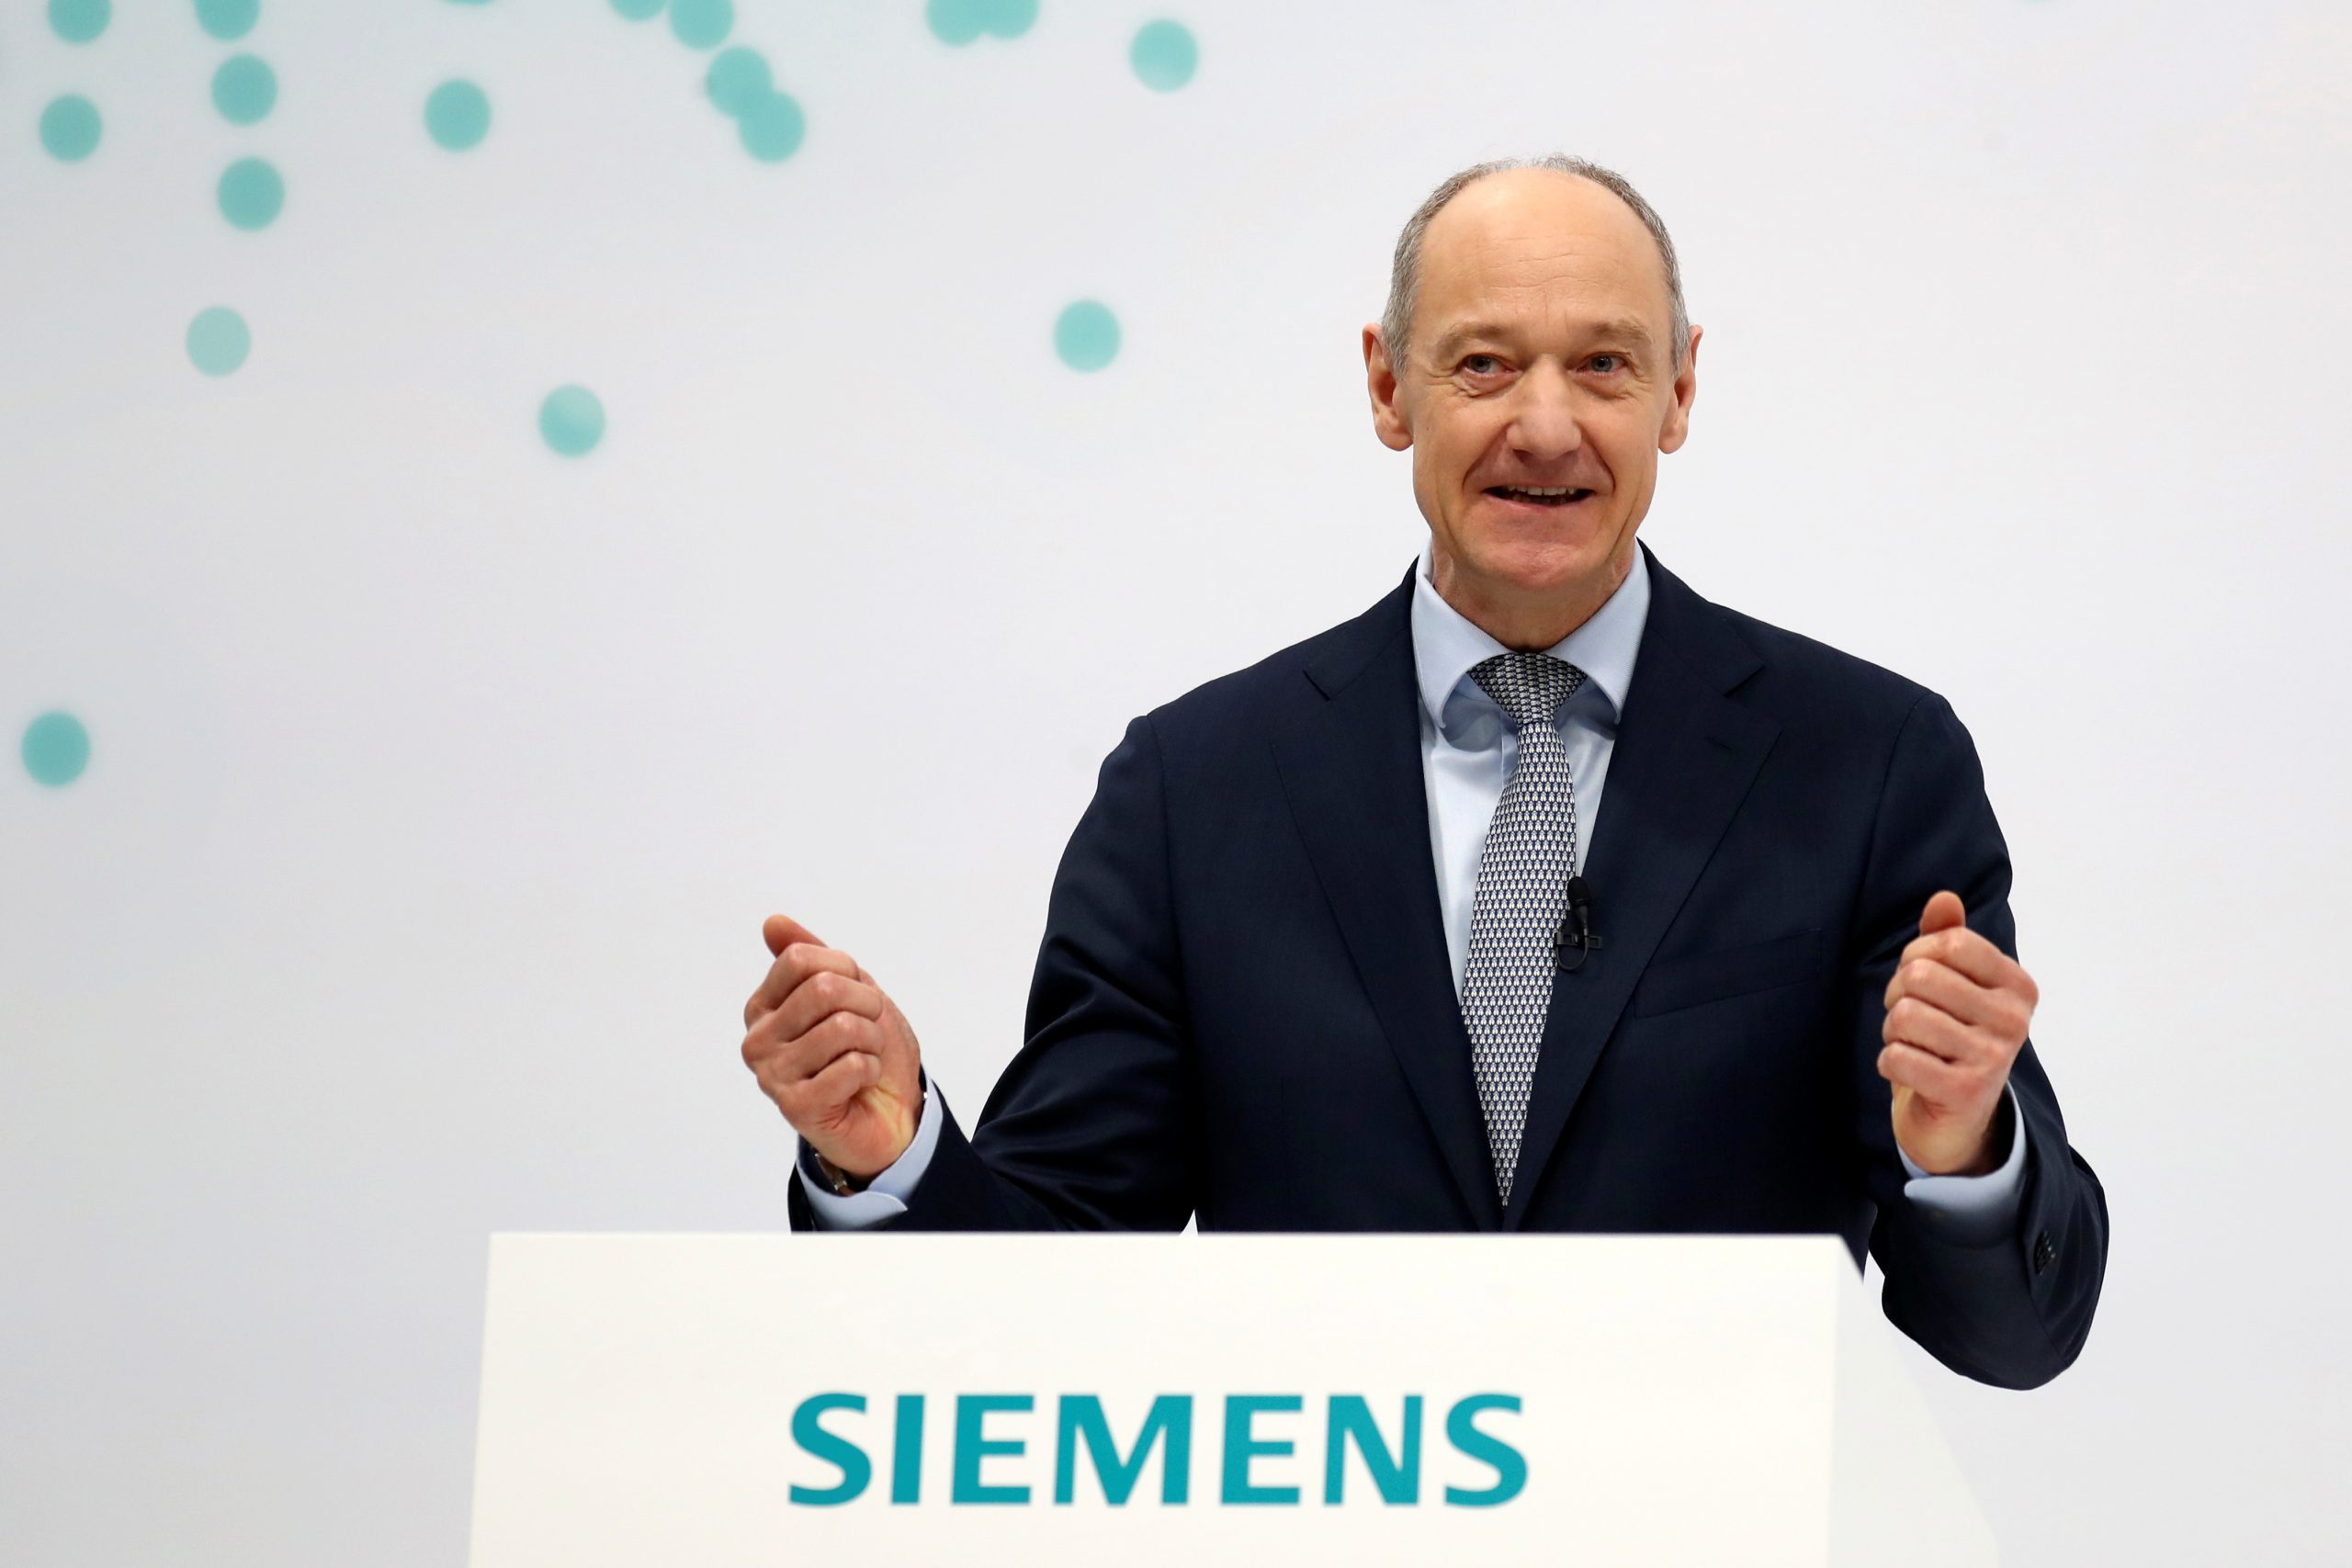  Siemens raises growth target with digital drive